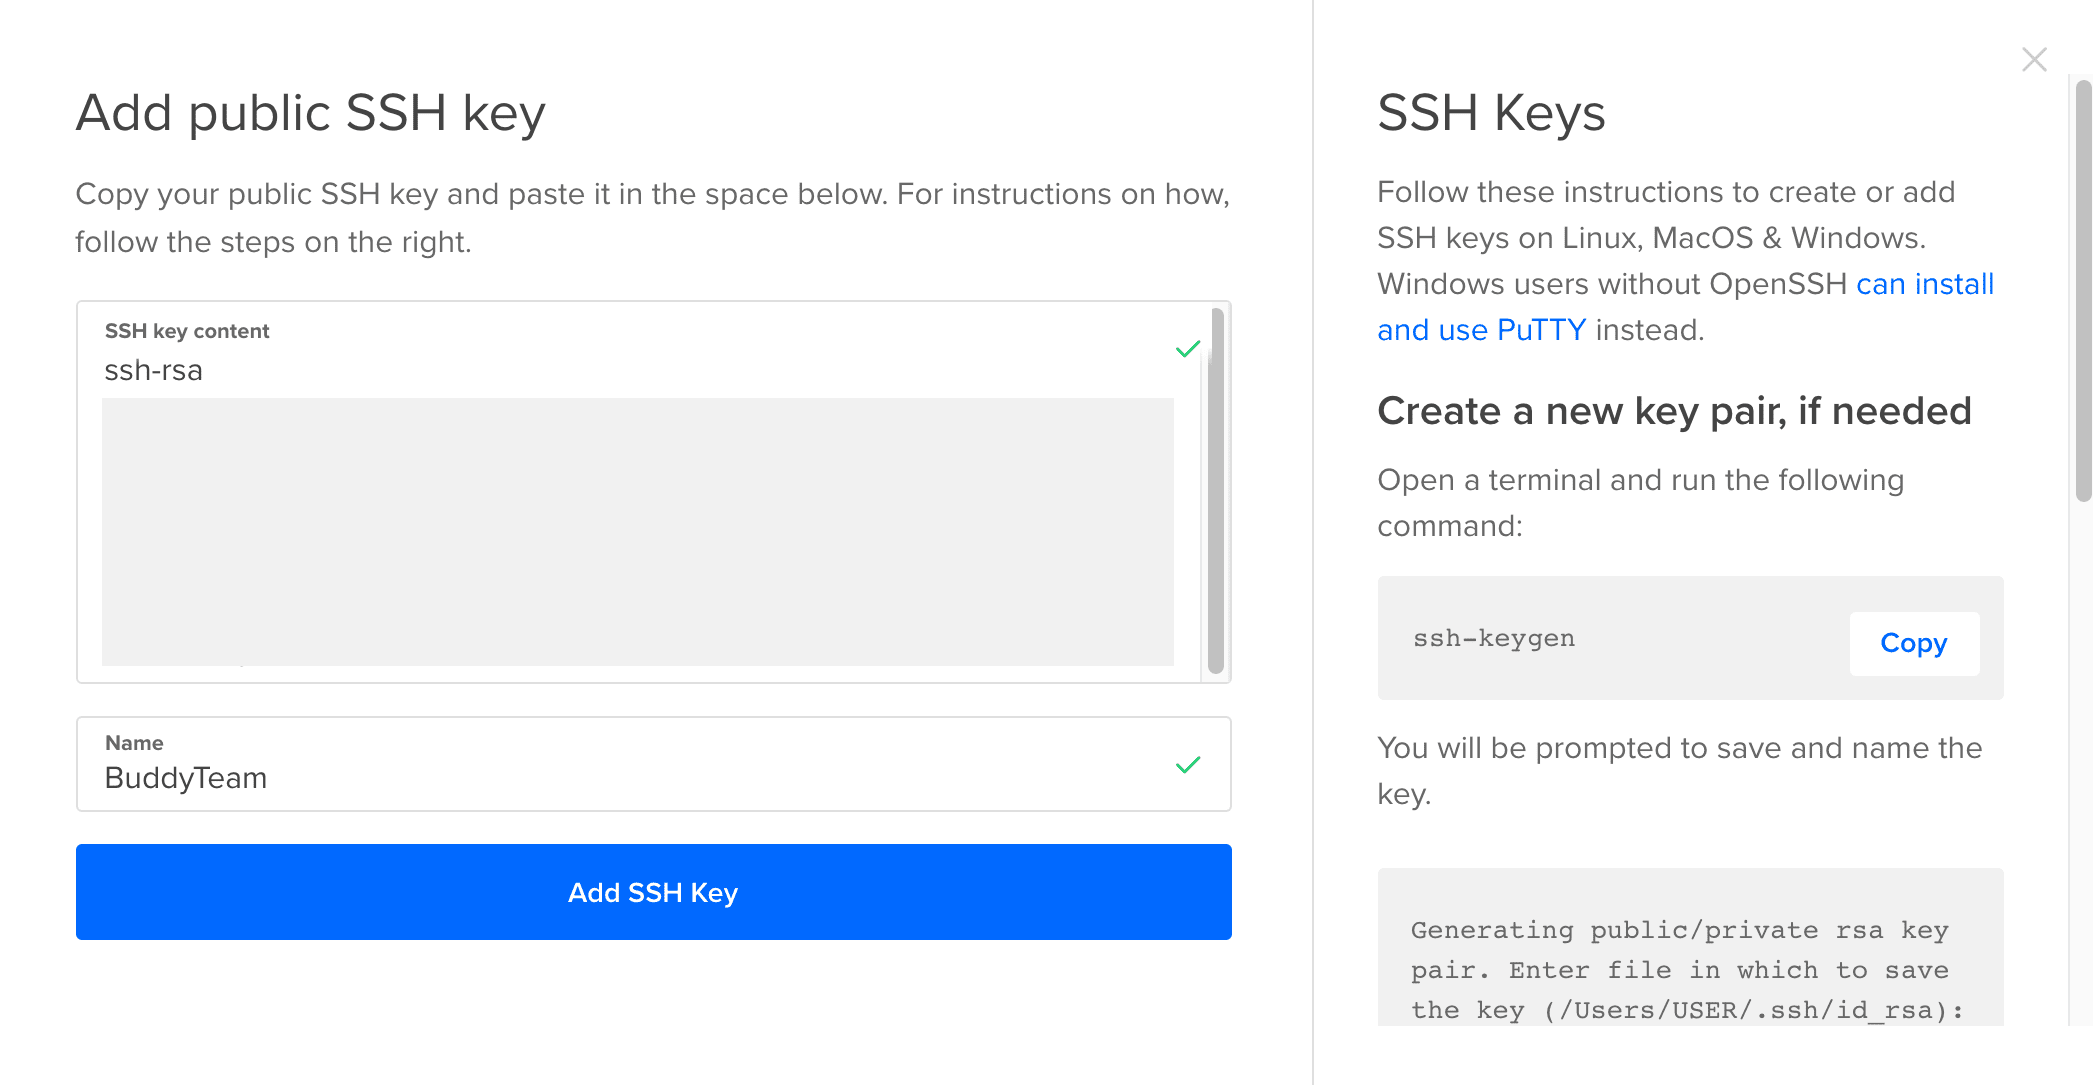 Adding a new SSH key